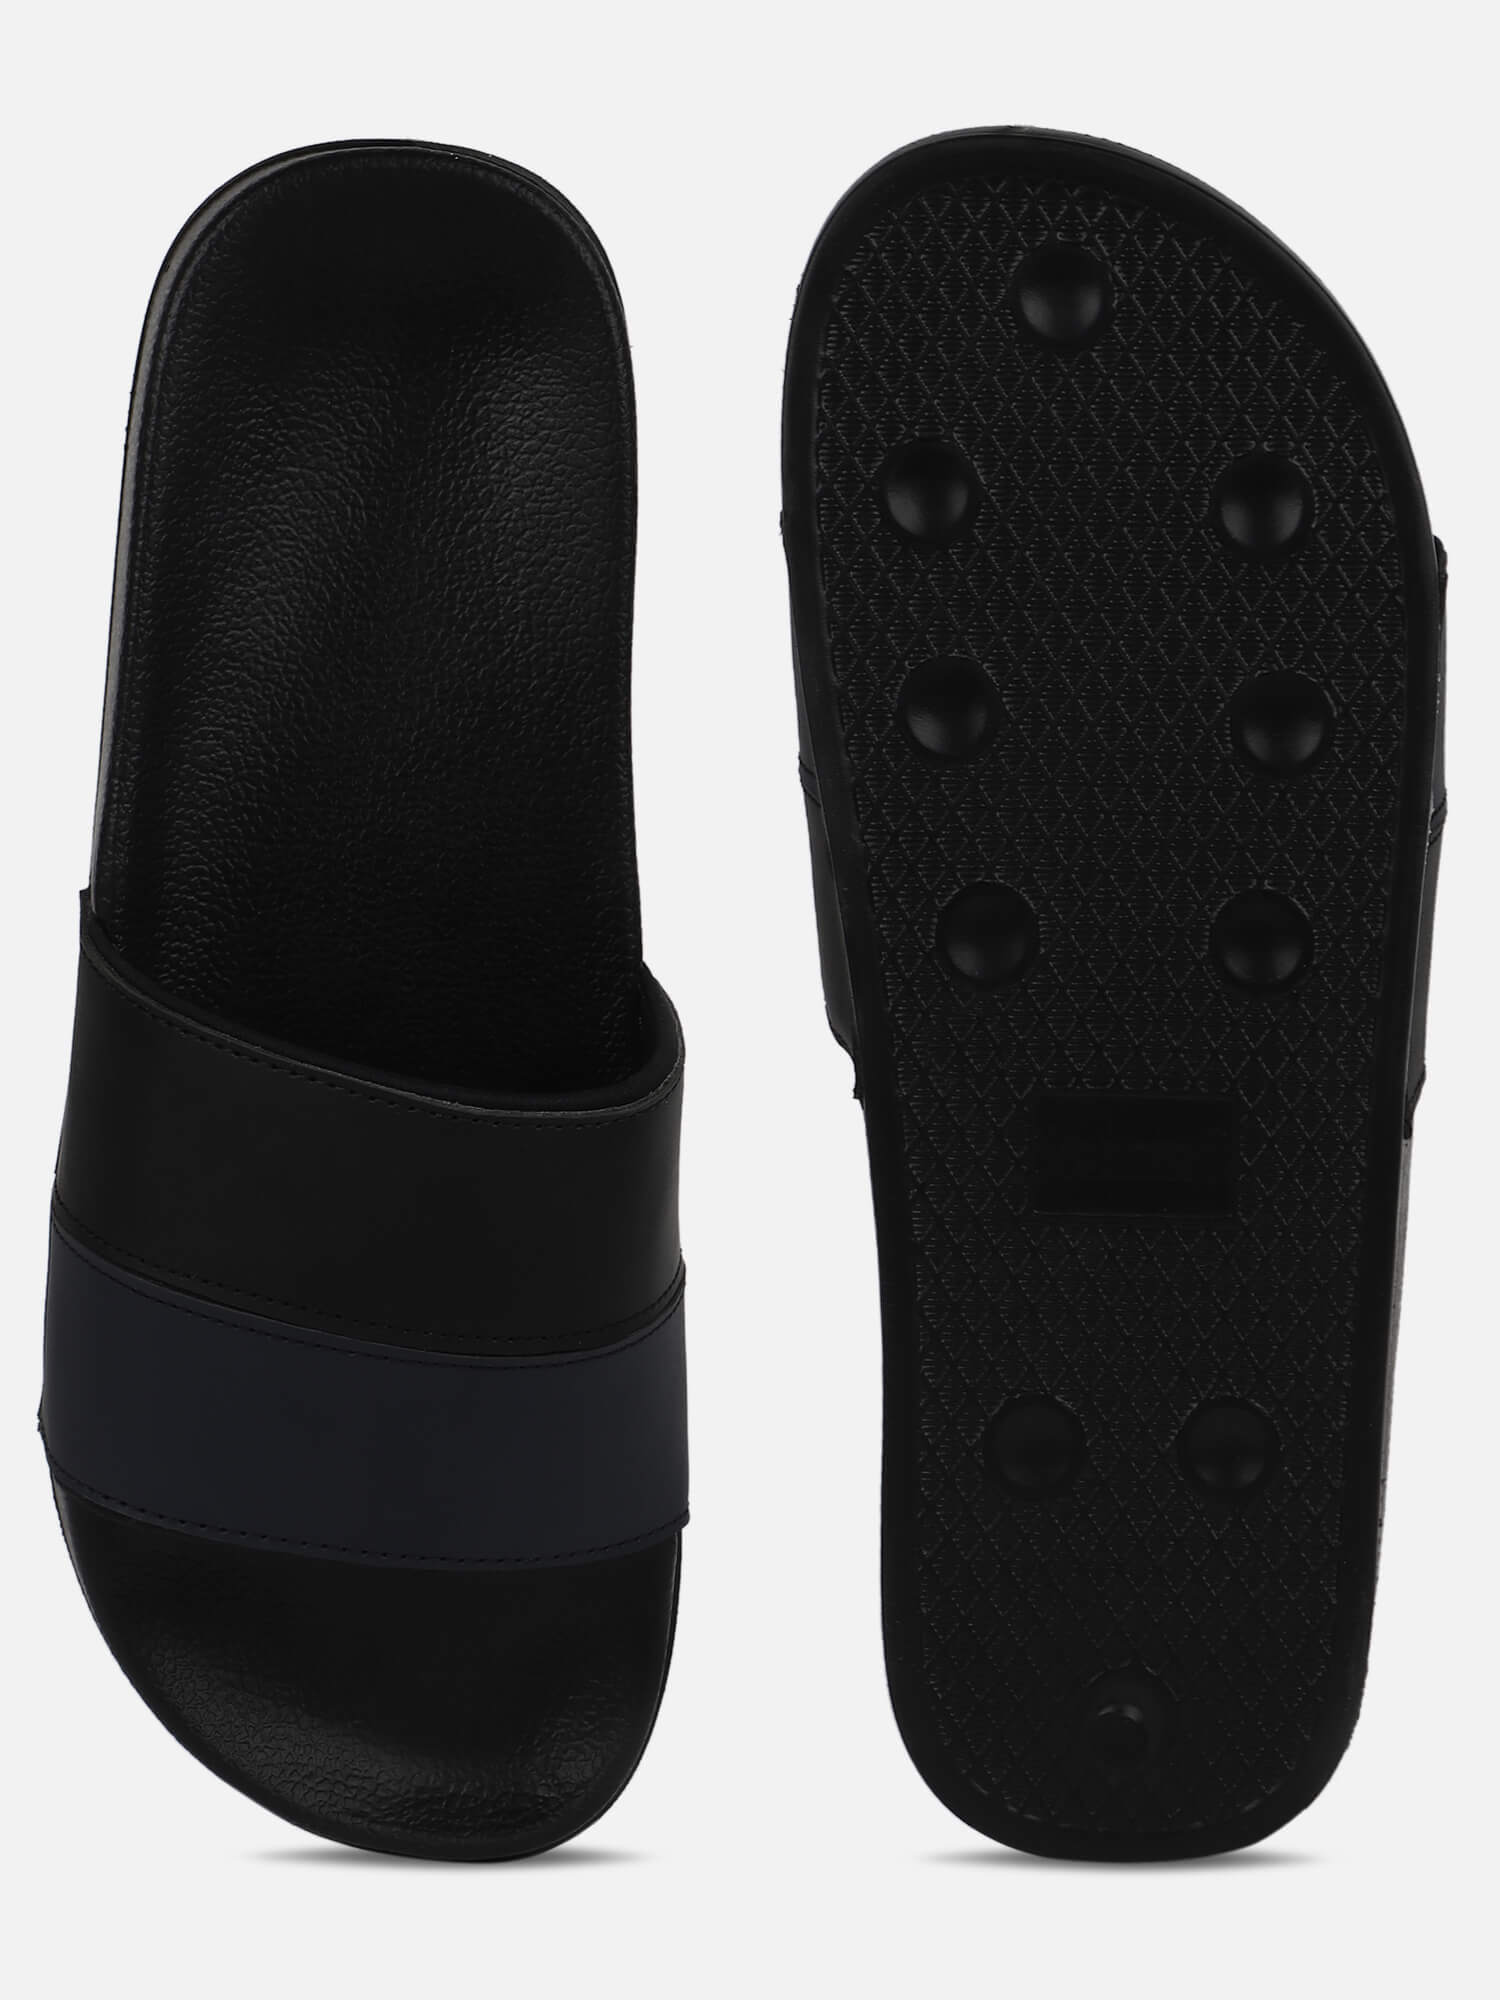 Buy ADIDAS Adilette Comfort Fabric Low Tops Slipon Womens Sport Sandals   Shoppers Stop